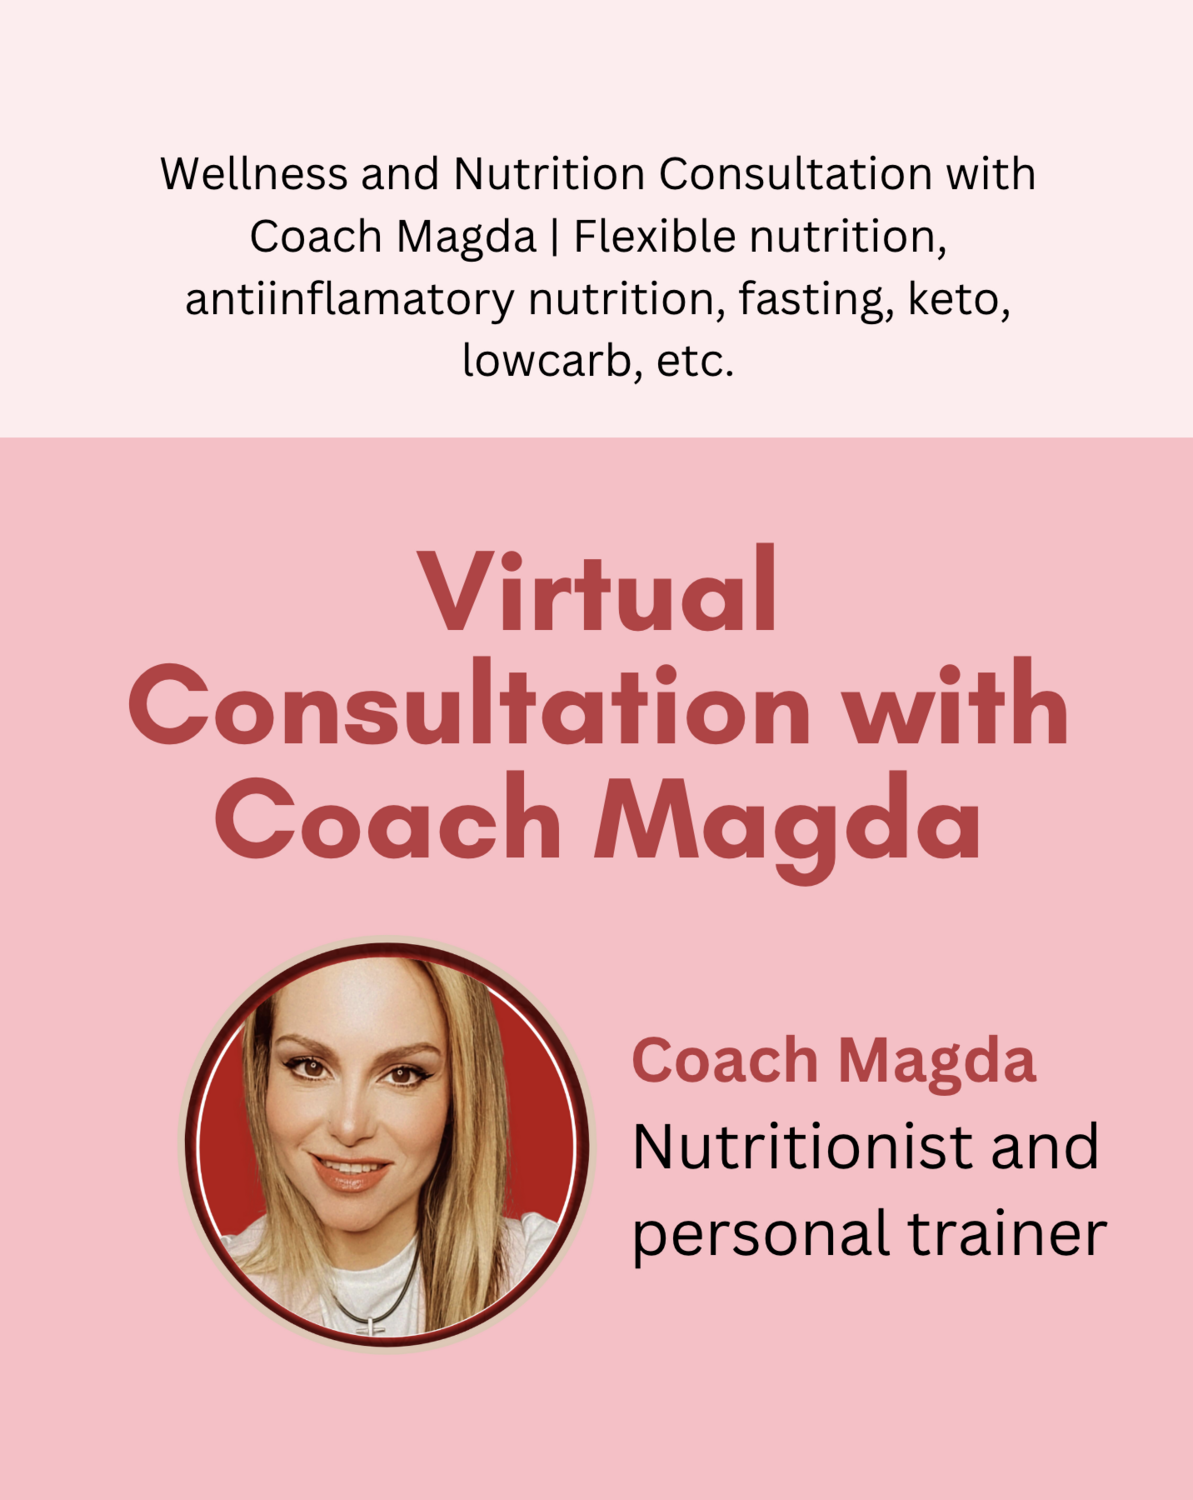 Virtual Consultation with Coach Magda - 45 minutes - ENGLISH